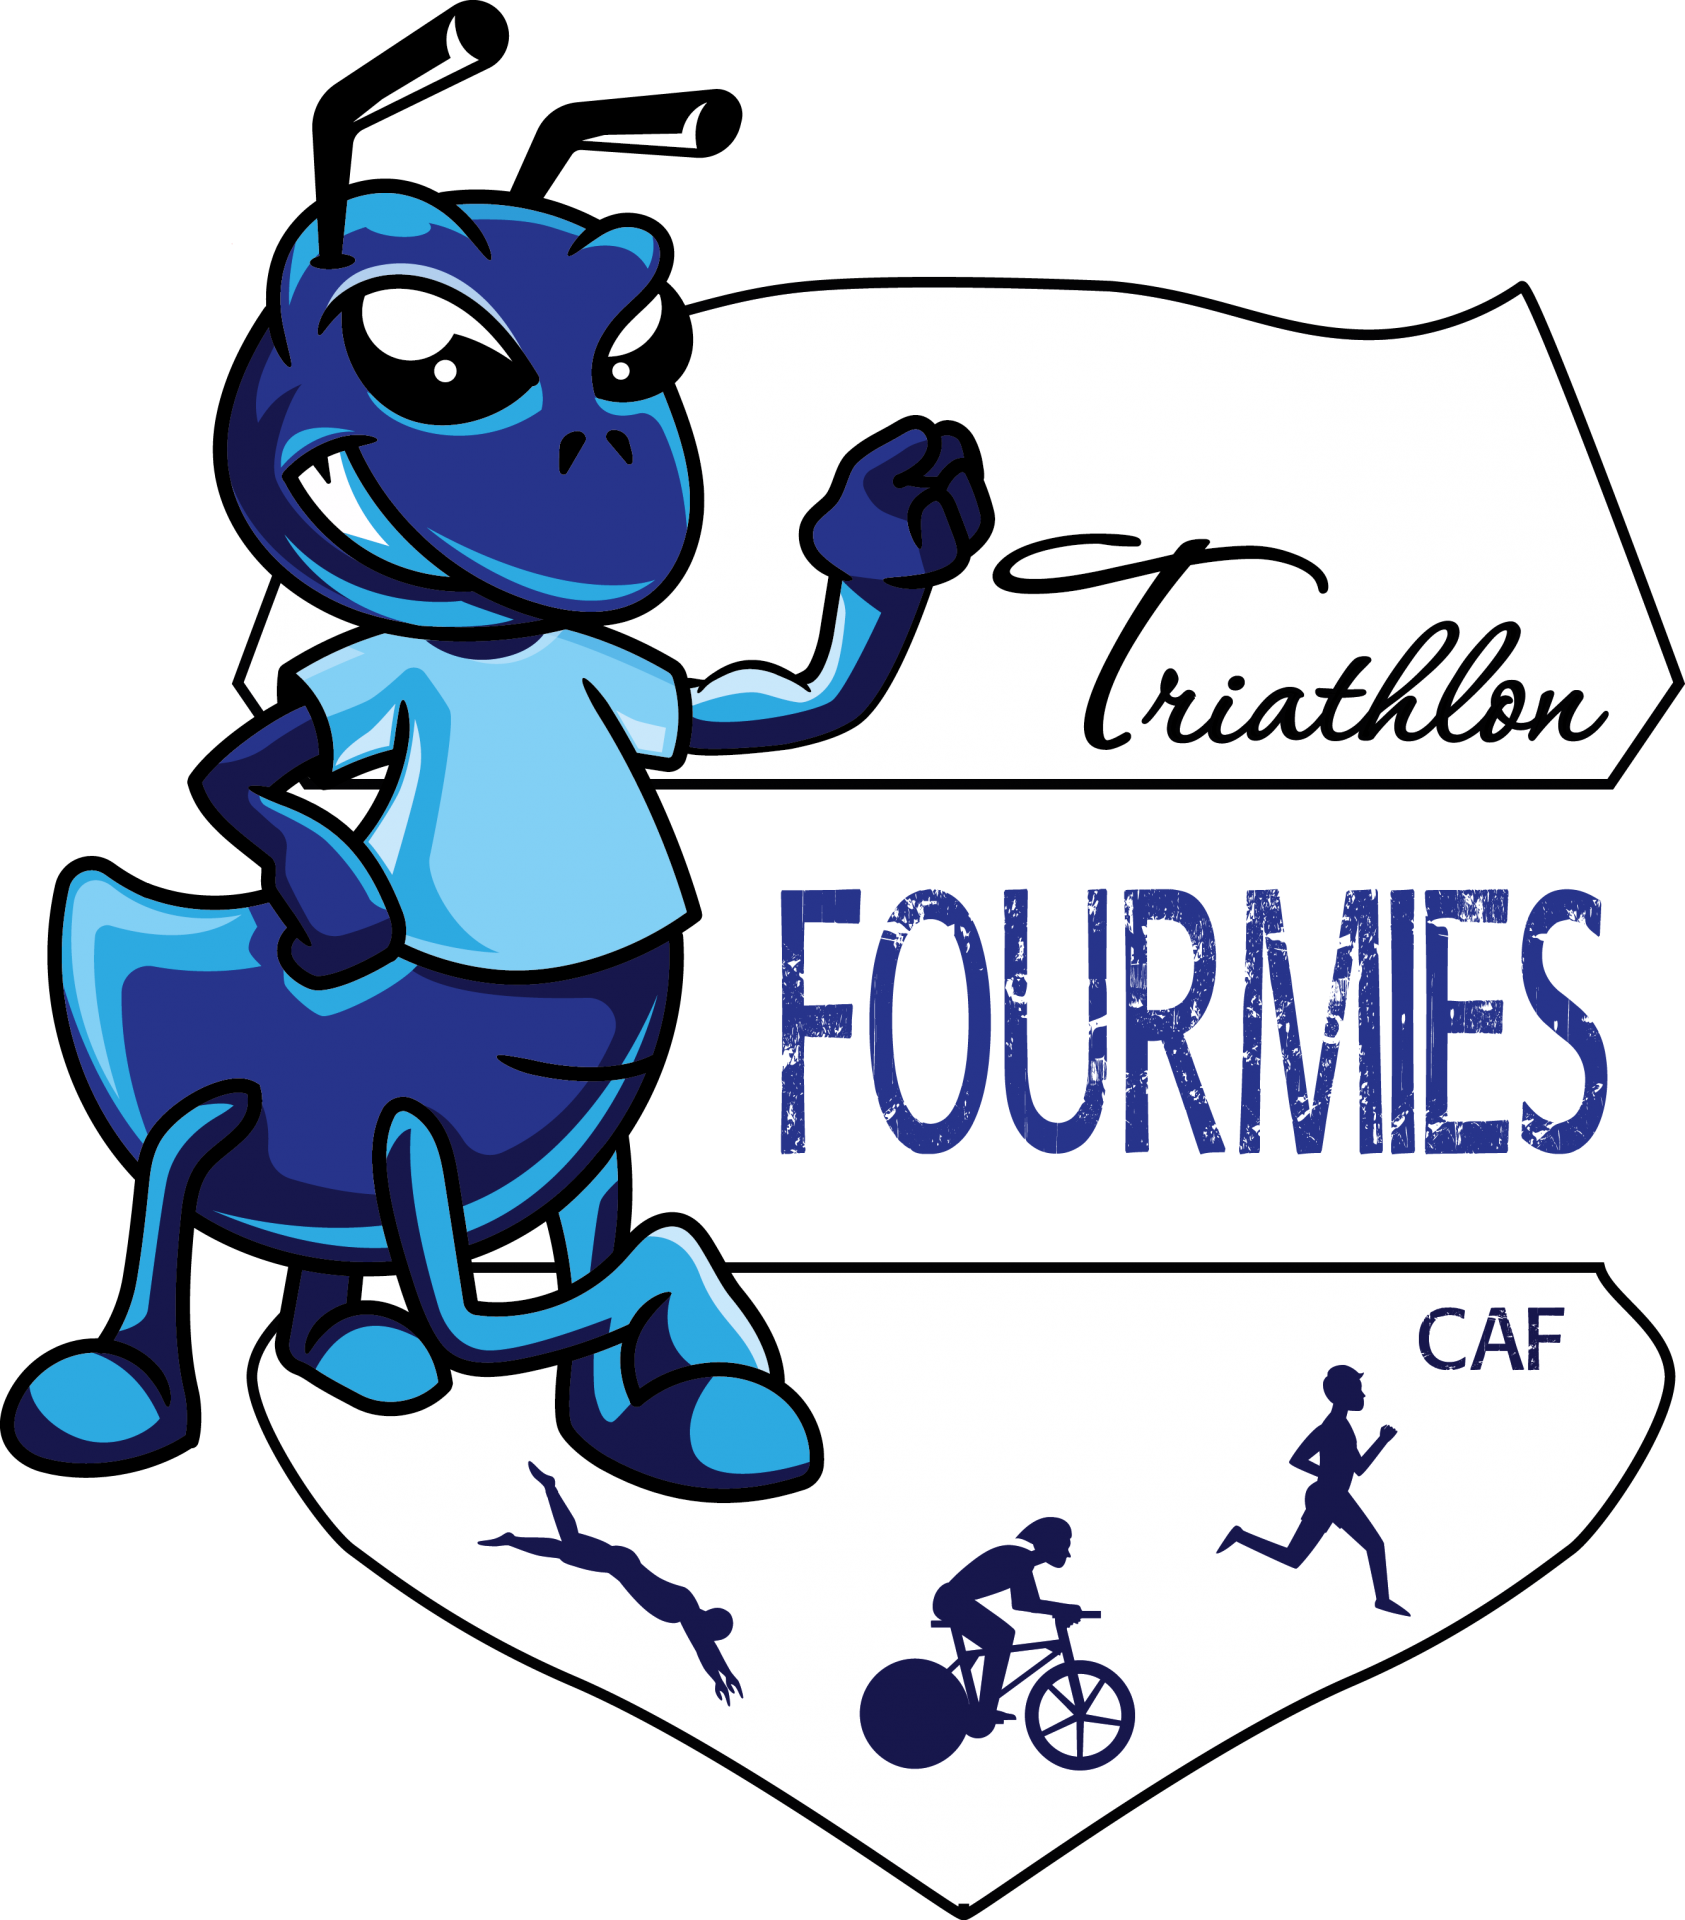 Joveniaux graphiste fourmies triathlon avesnes sur helpe logo